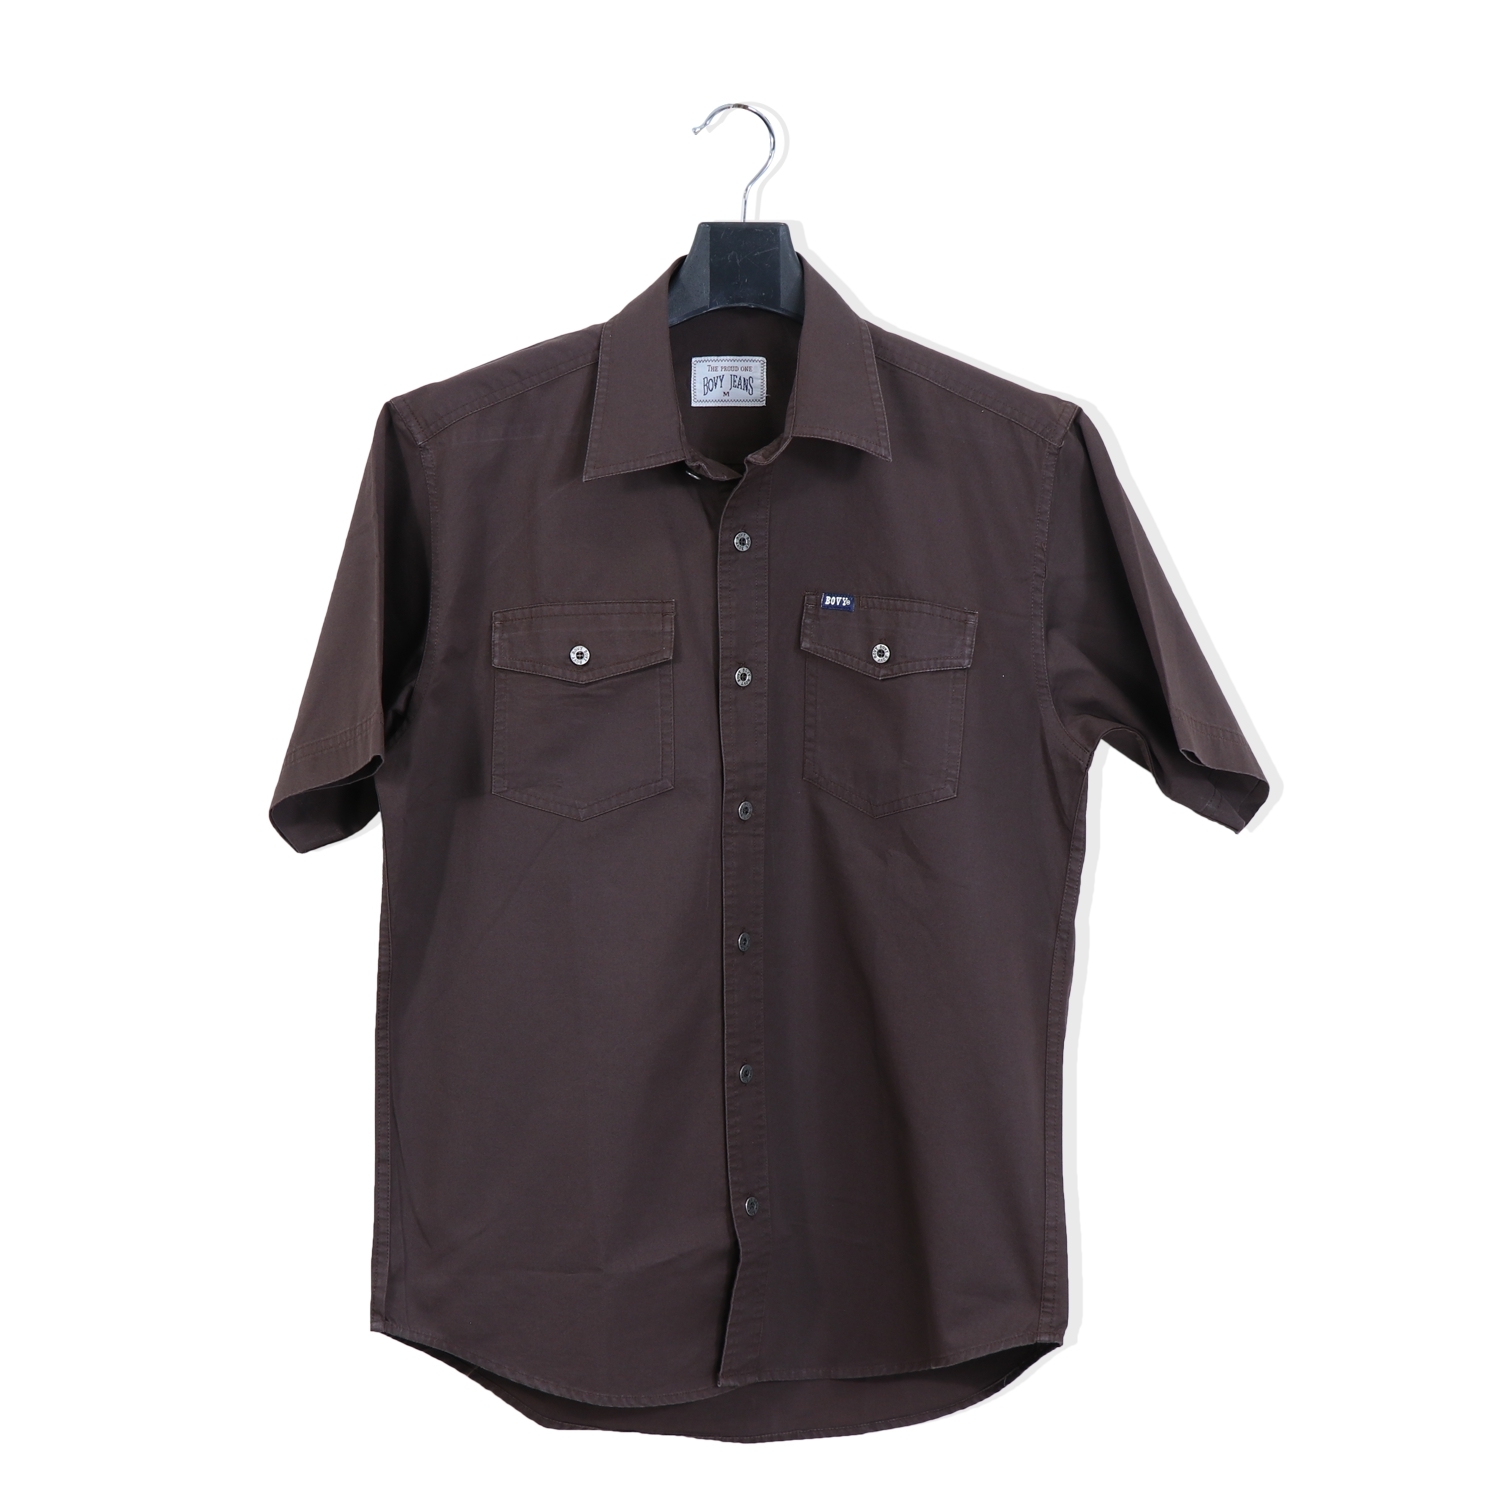 Bovy ฺBrown Shirt  - เสื้อเชิ้ตแขนสั้นสีน้ำตาล  รุ่นBA 3596-BR-09